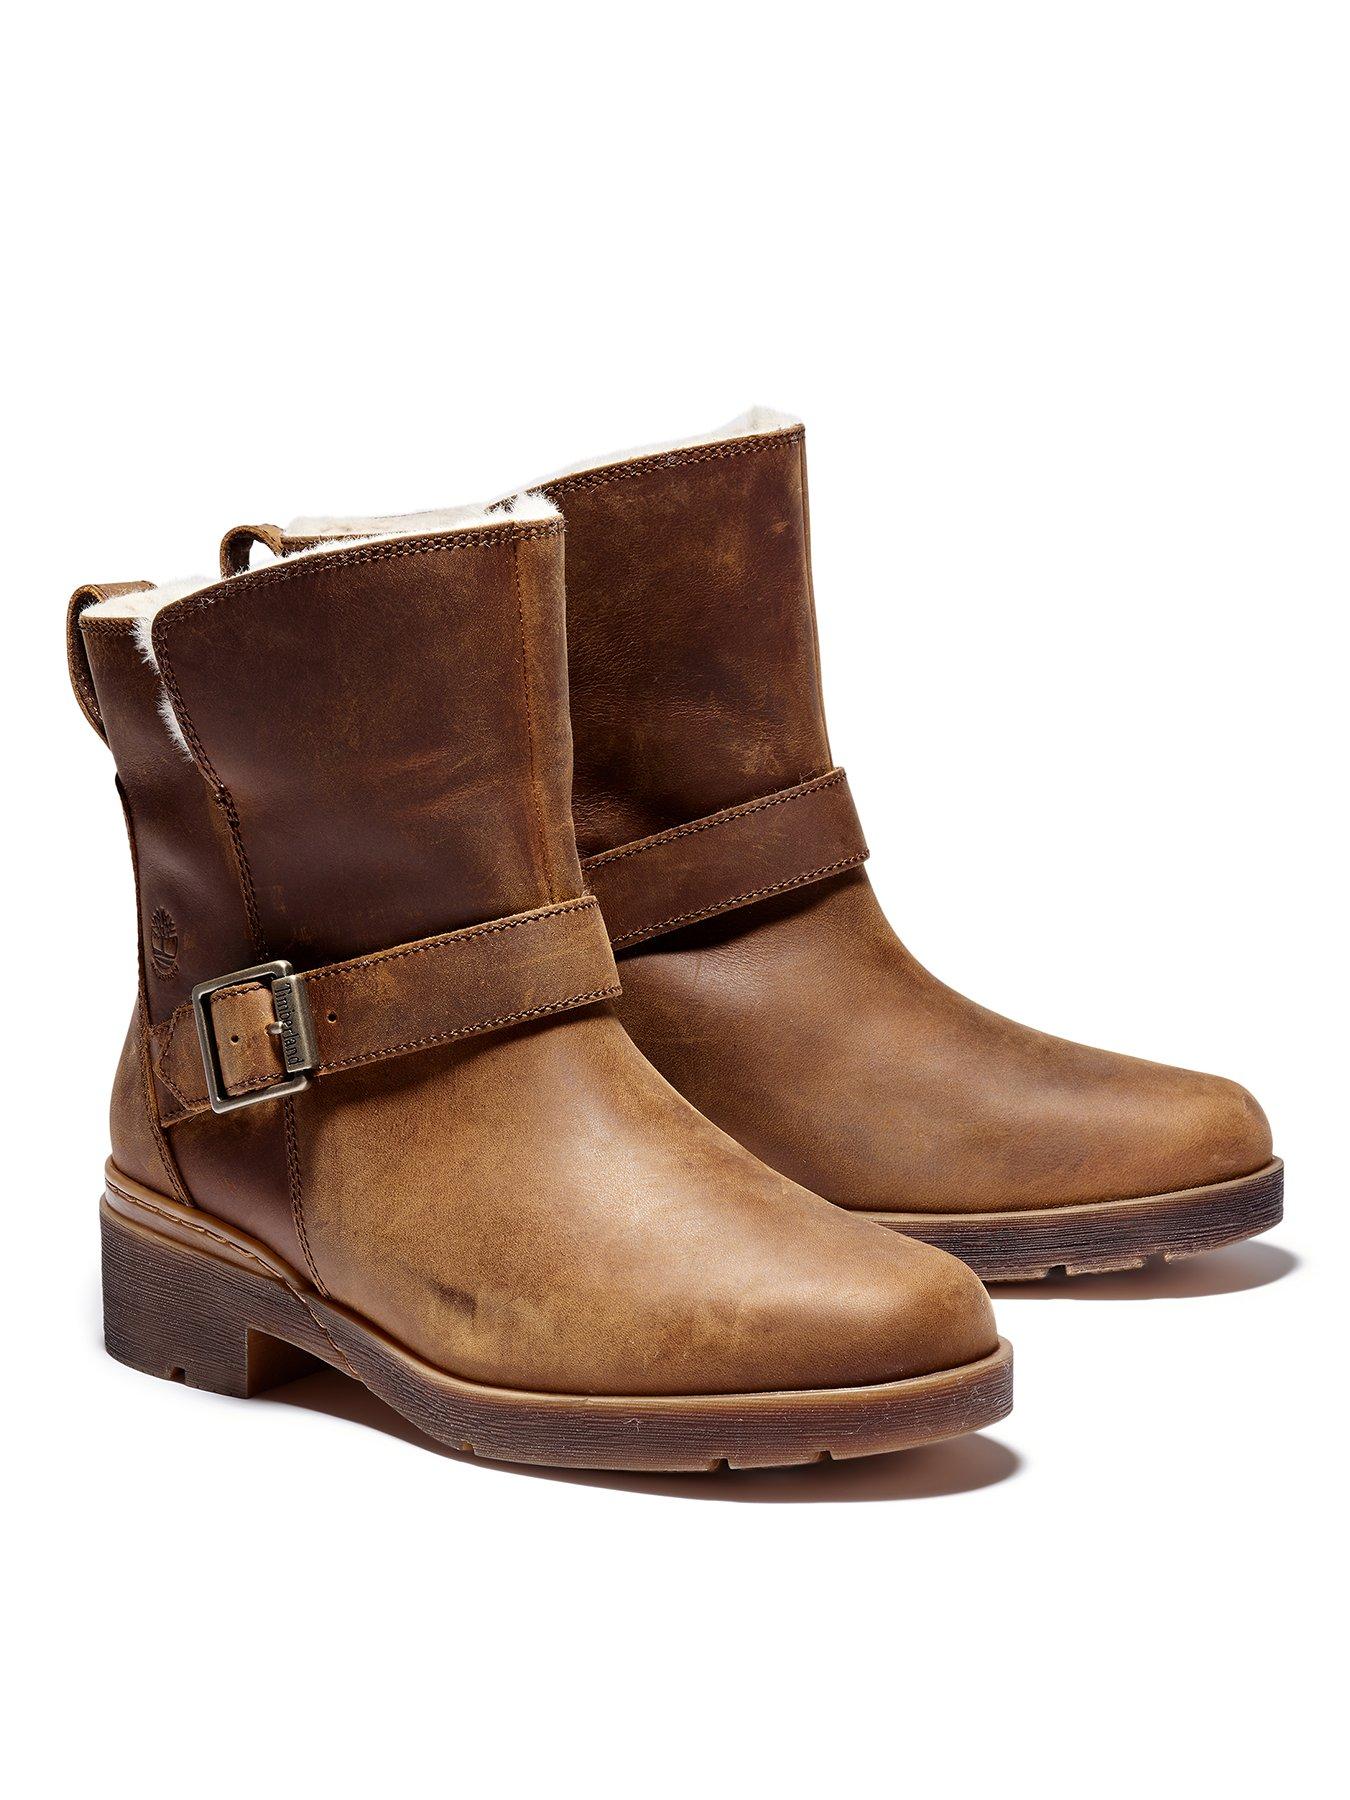 timberland boots sale uk